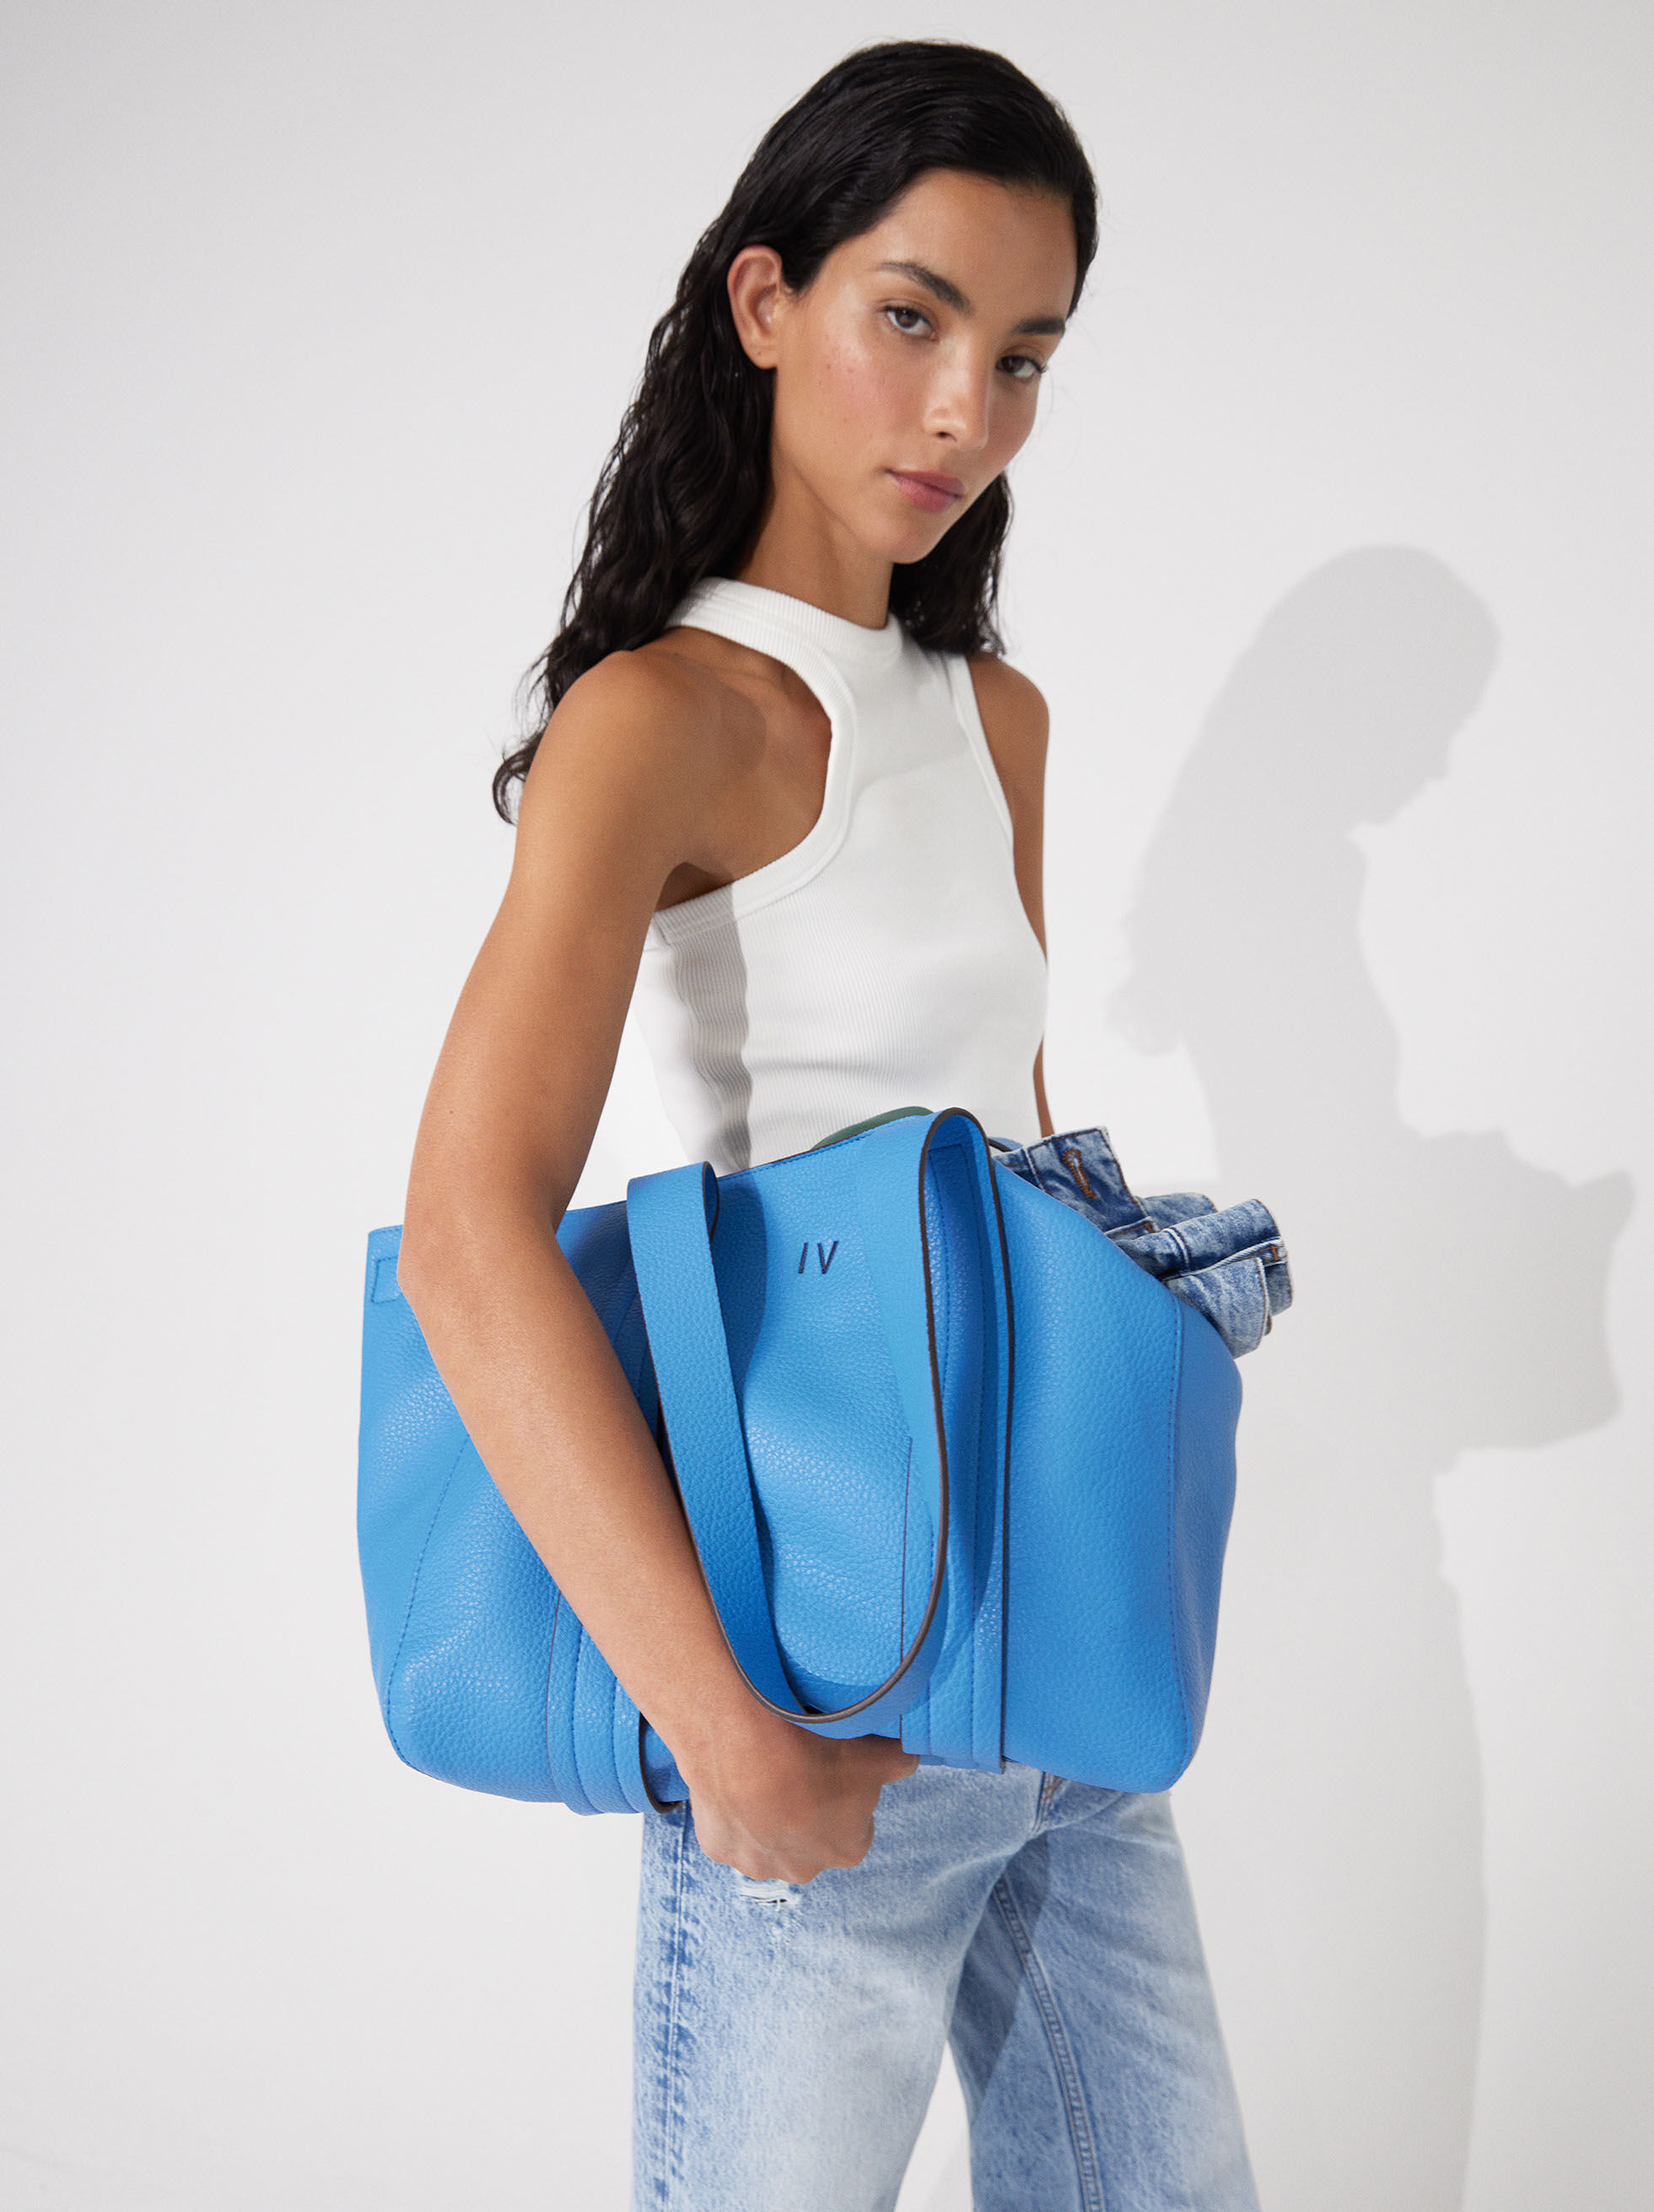 Women Hand Bag Handbags Women Shoulder Tote Female Bags Fashion-Black -  Walmart.com